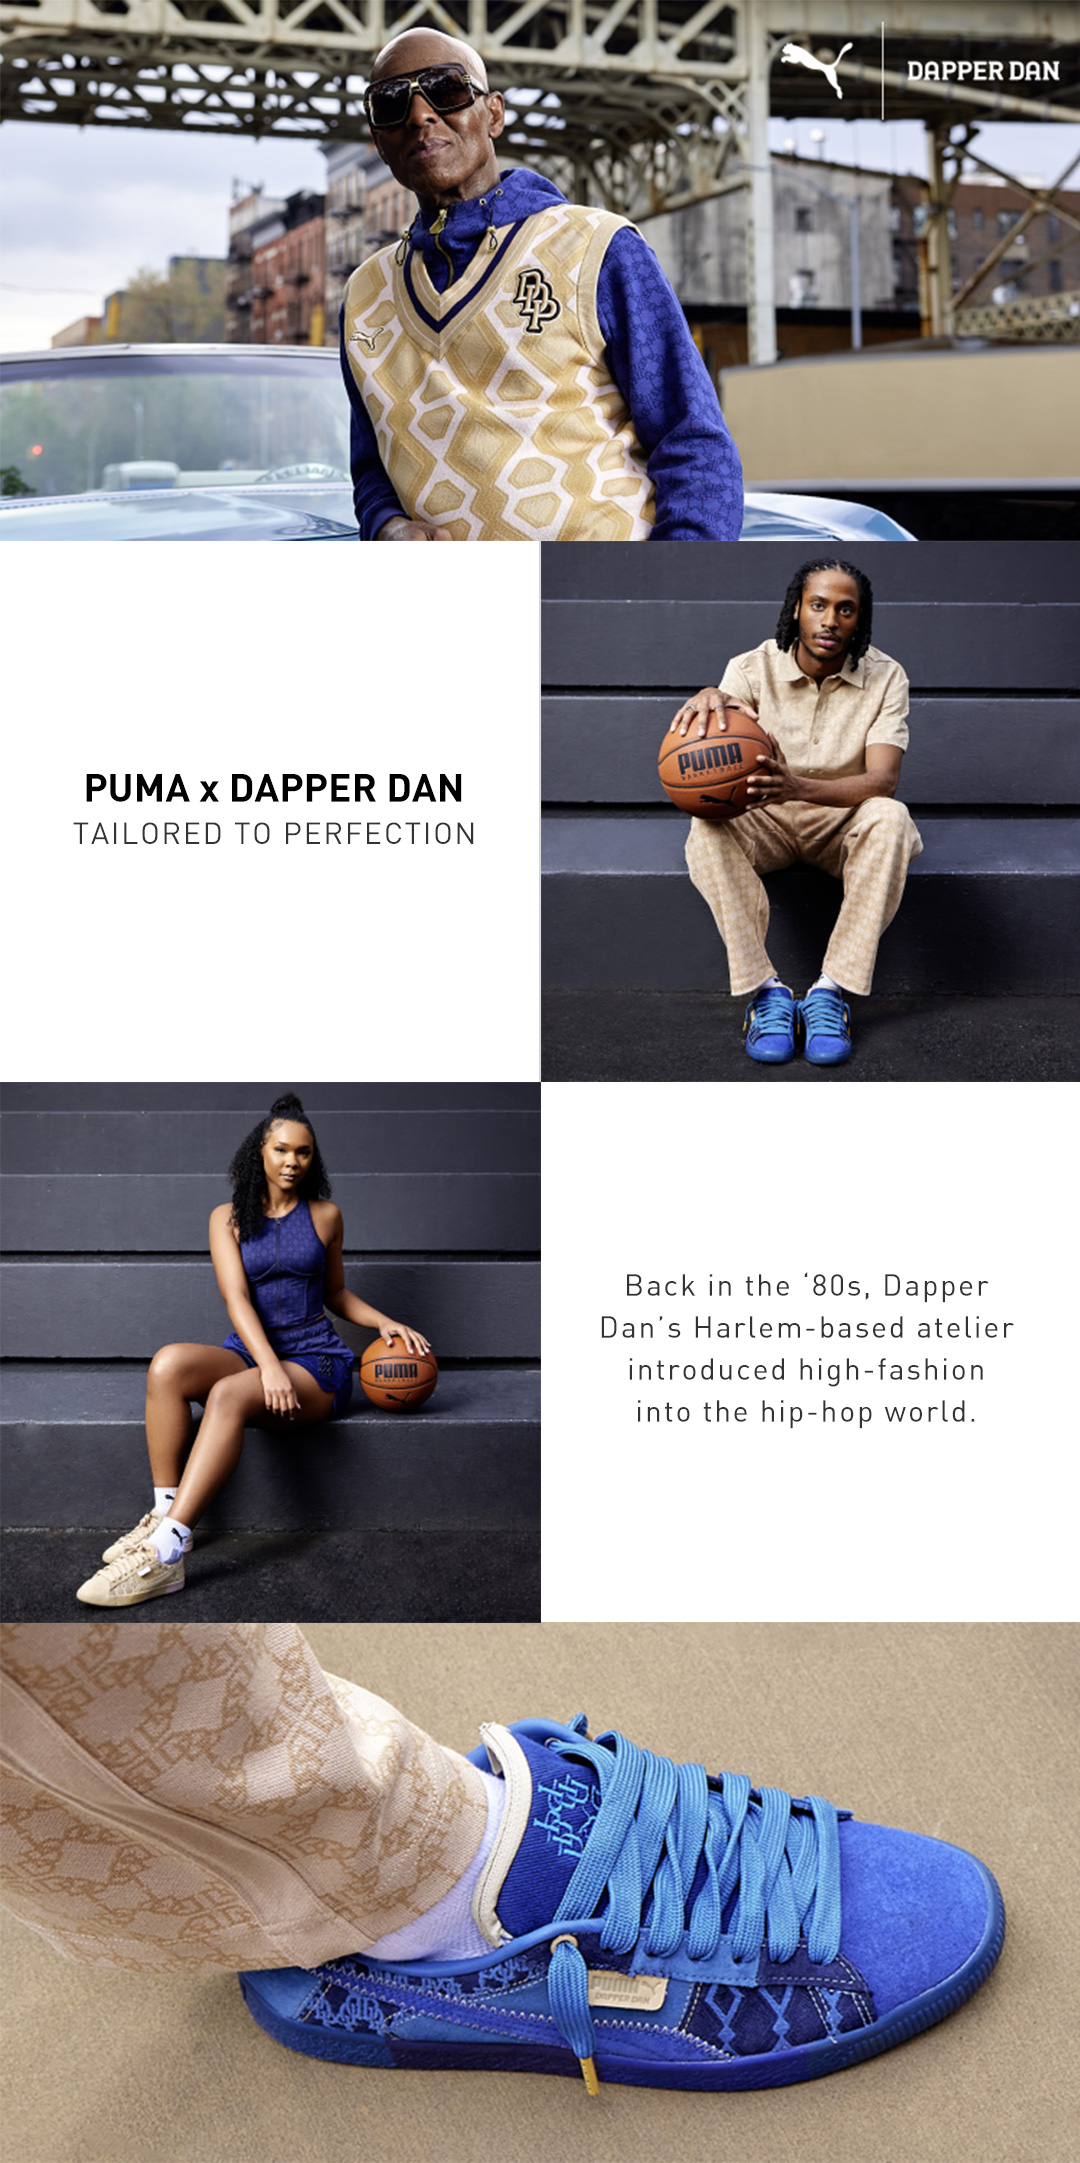 Puma X Dapper Dan - Tailored To Perfection